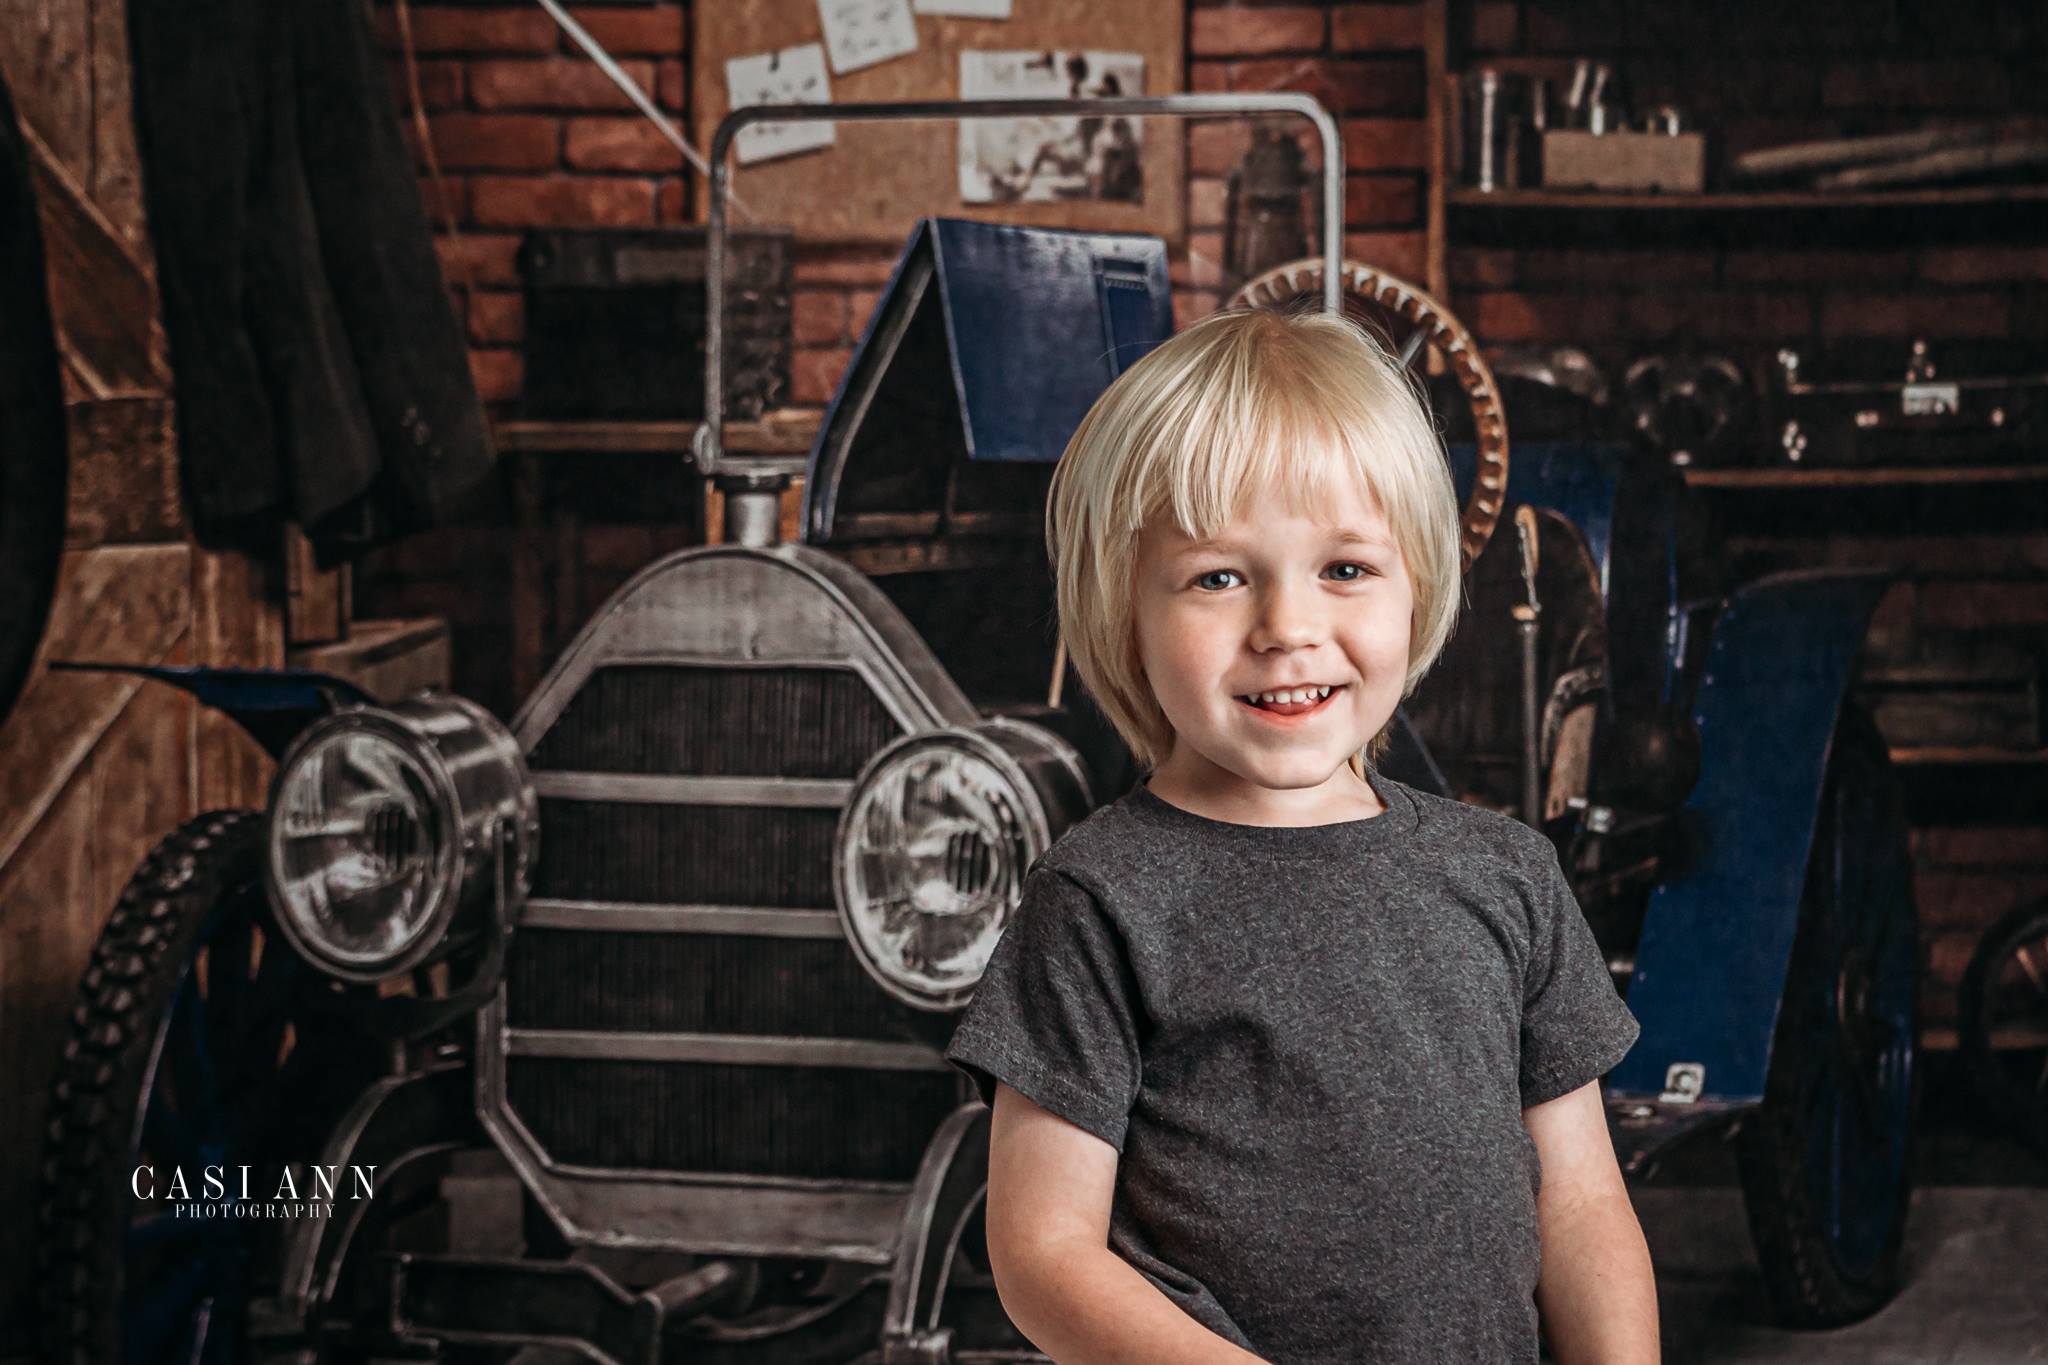 Kate Father's Day Garage Car Workshop Backdrops for Boy